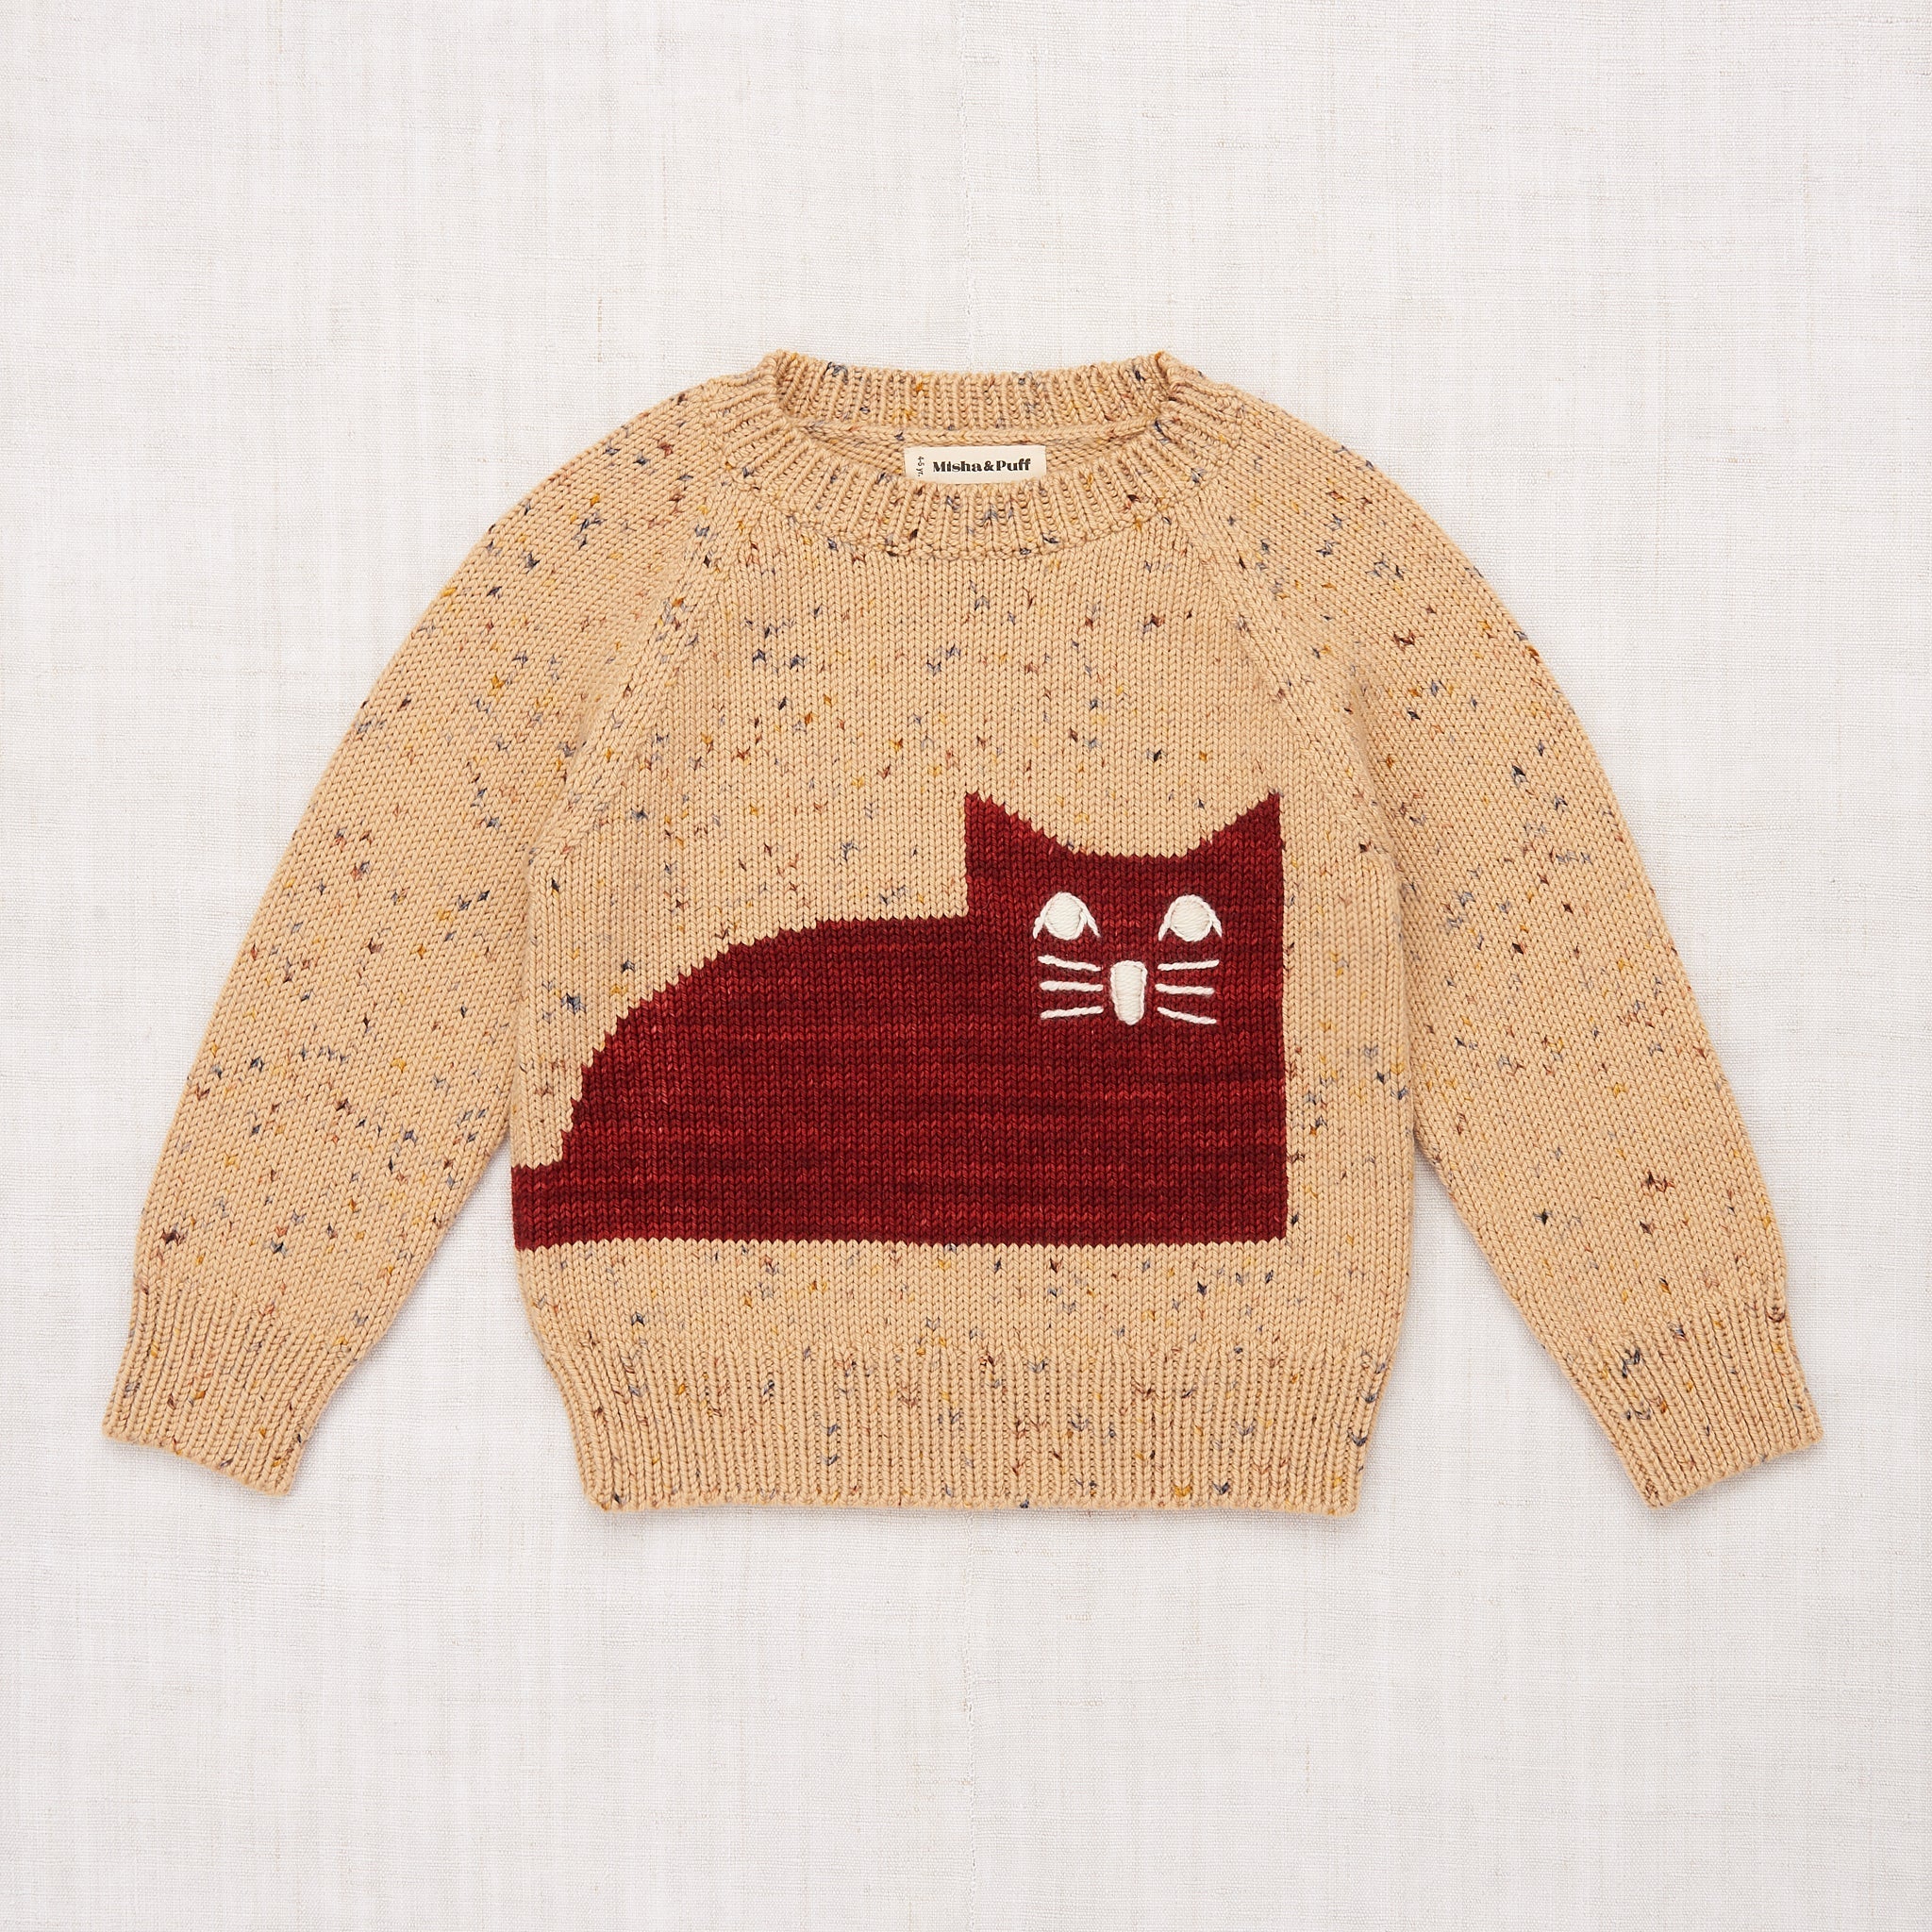 misha&puff simple sweater